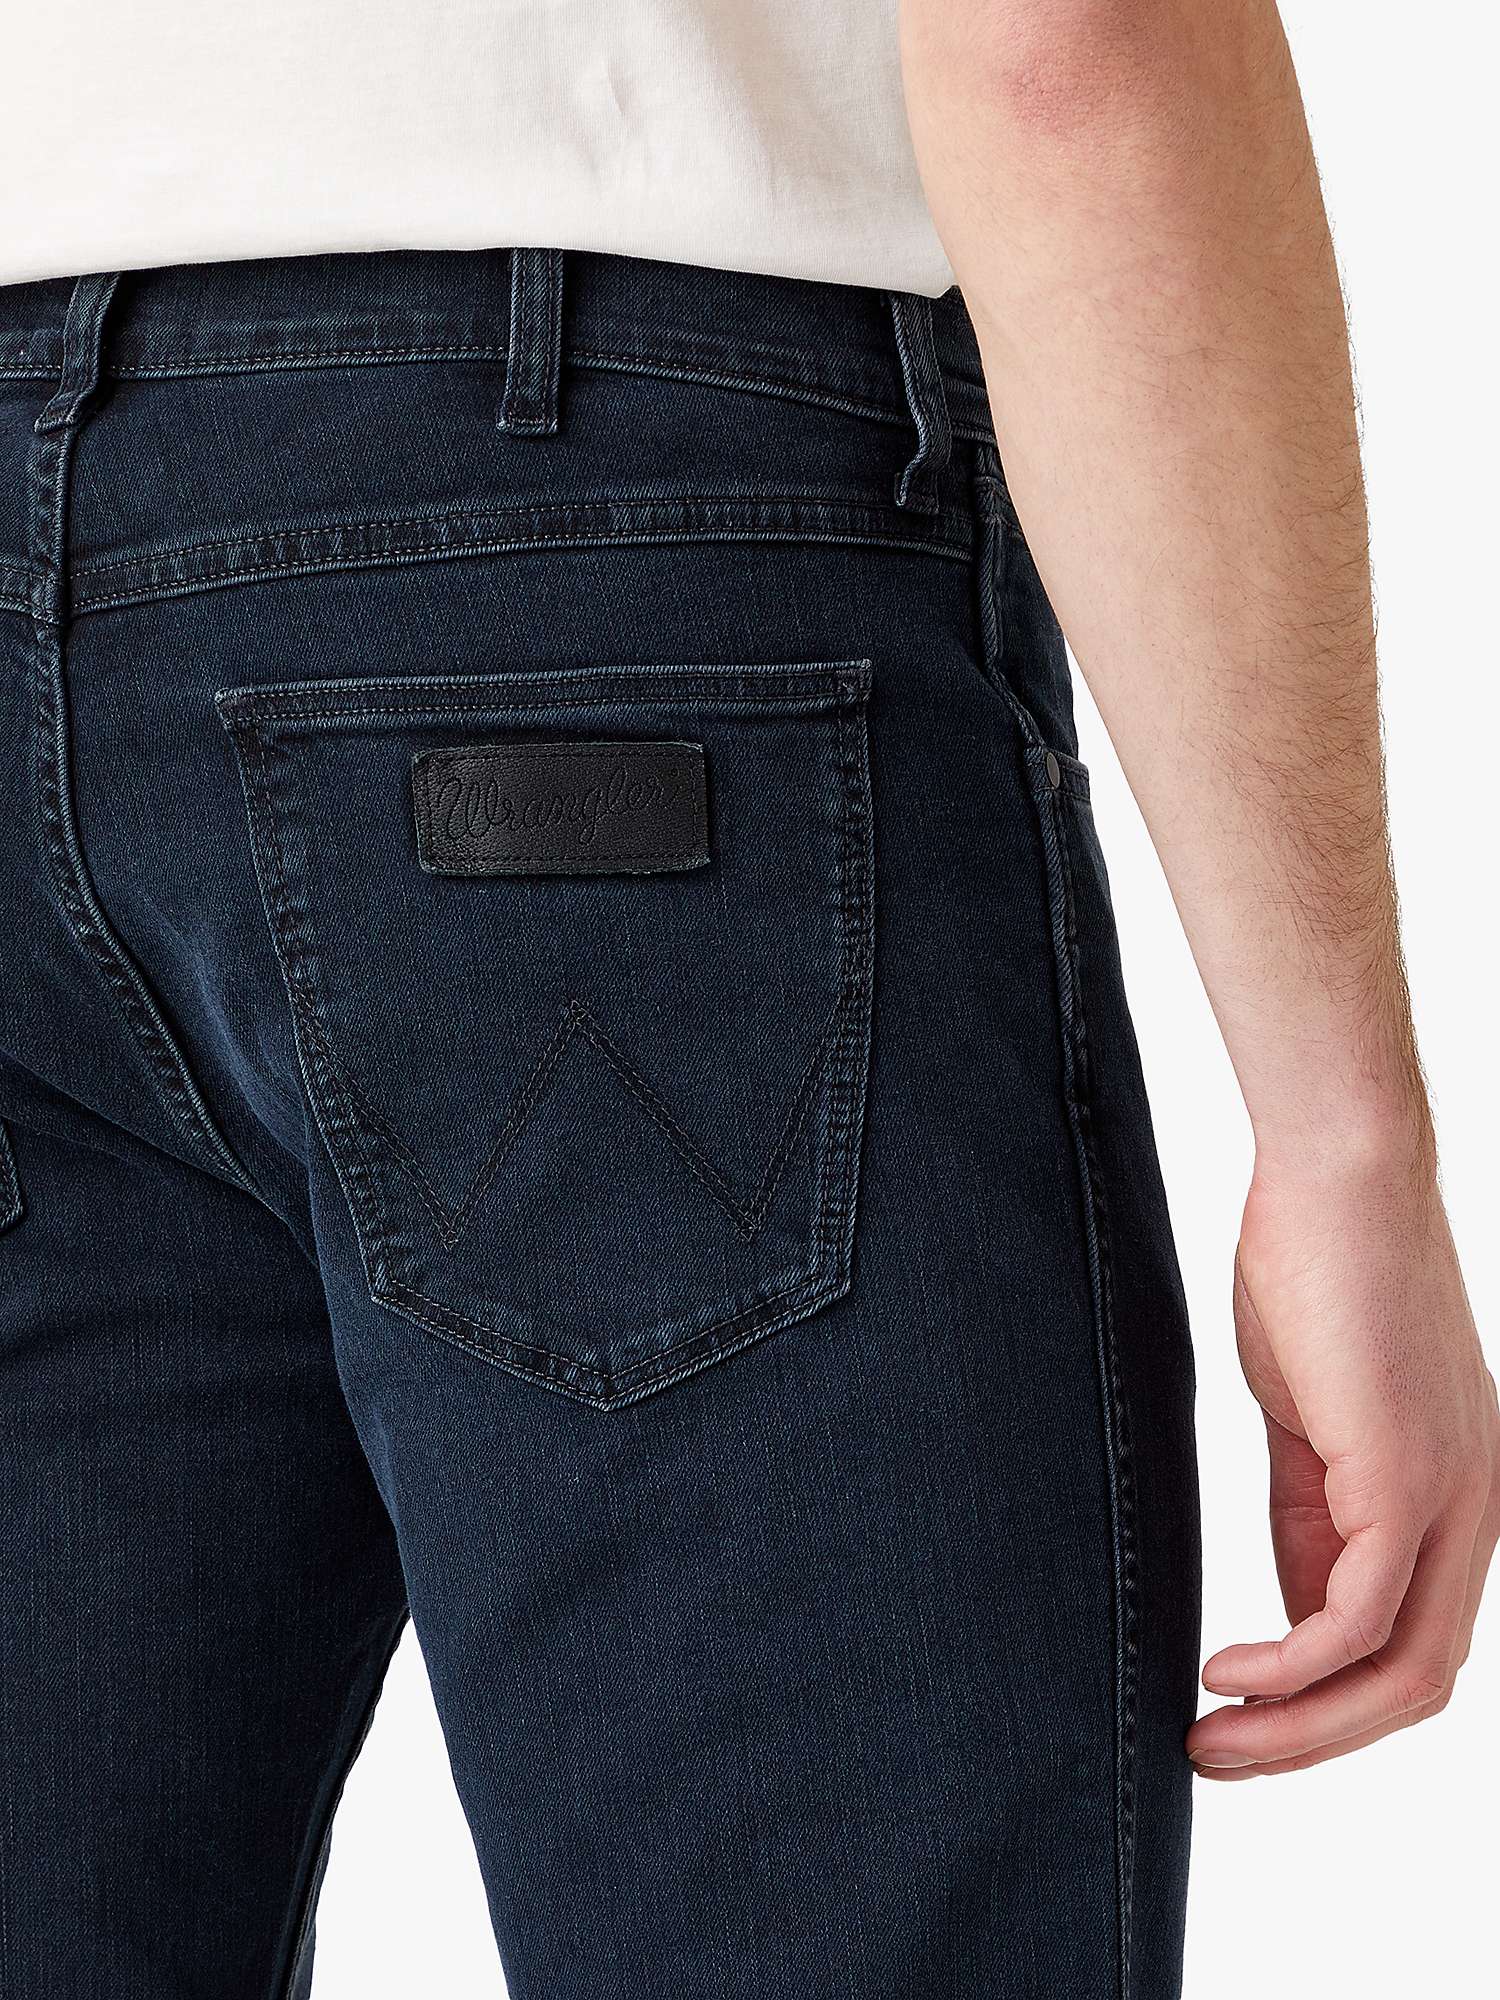 Buy Wrangler Greensboro Slim Fit Denim Jeans, Blue Online at johnlewis.com